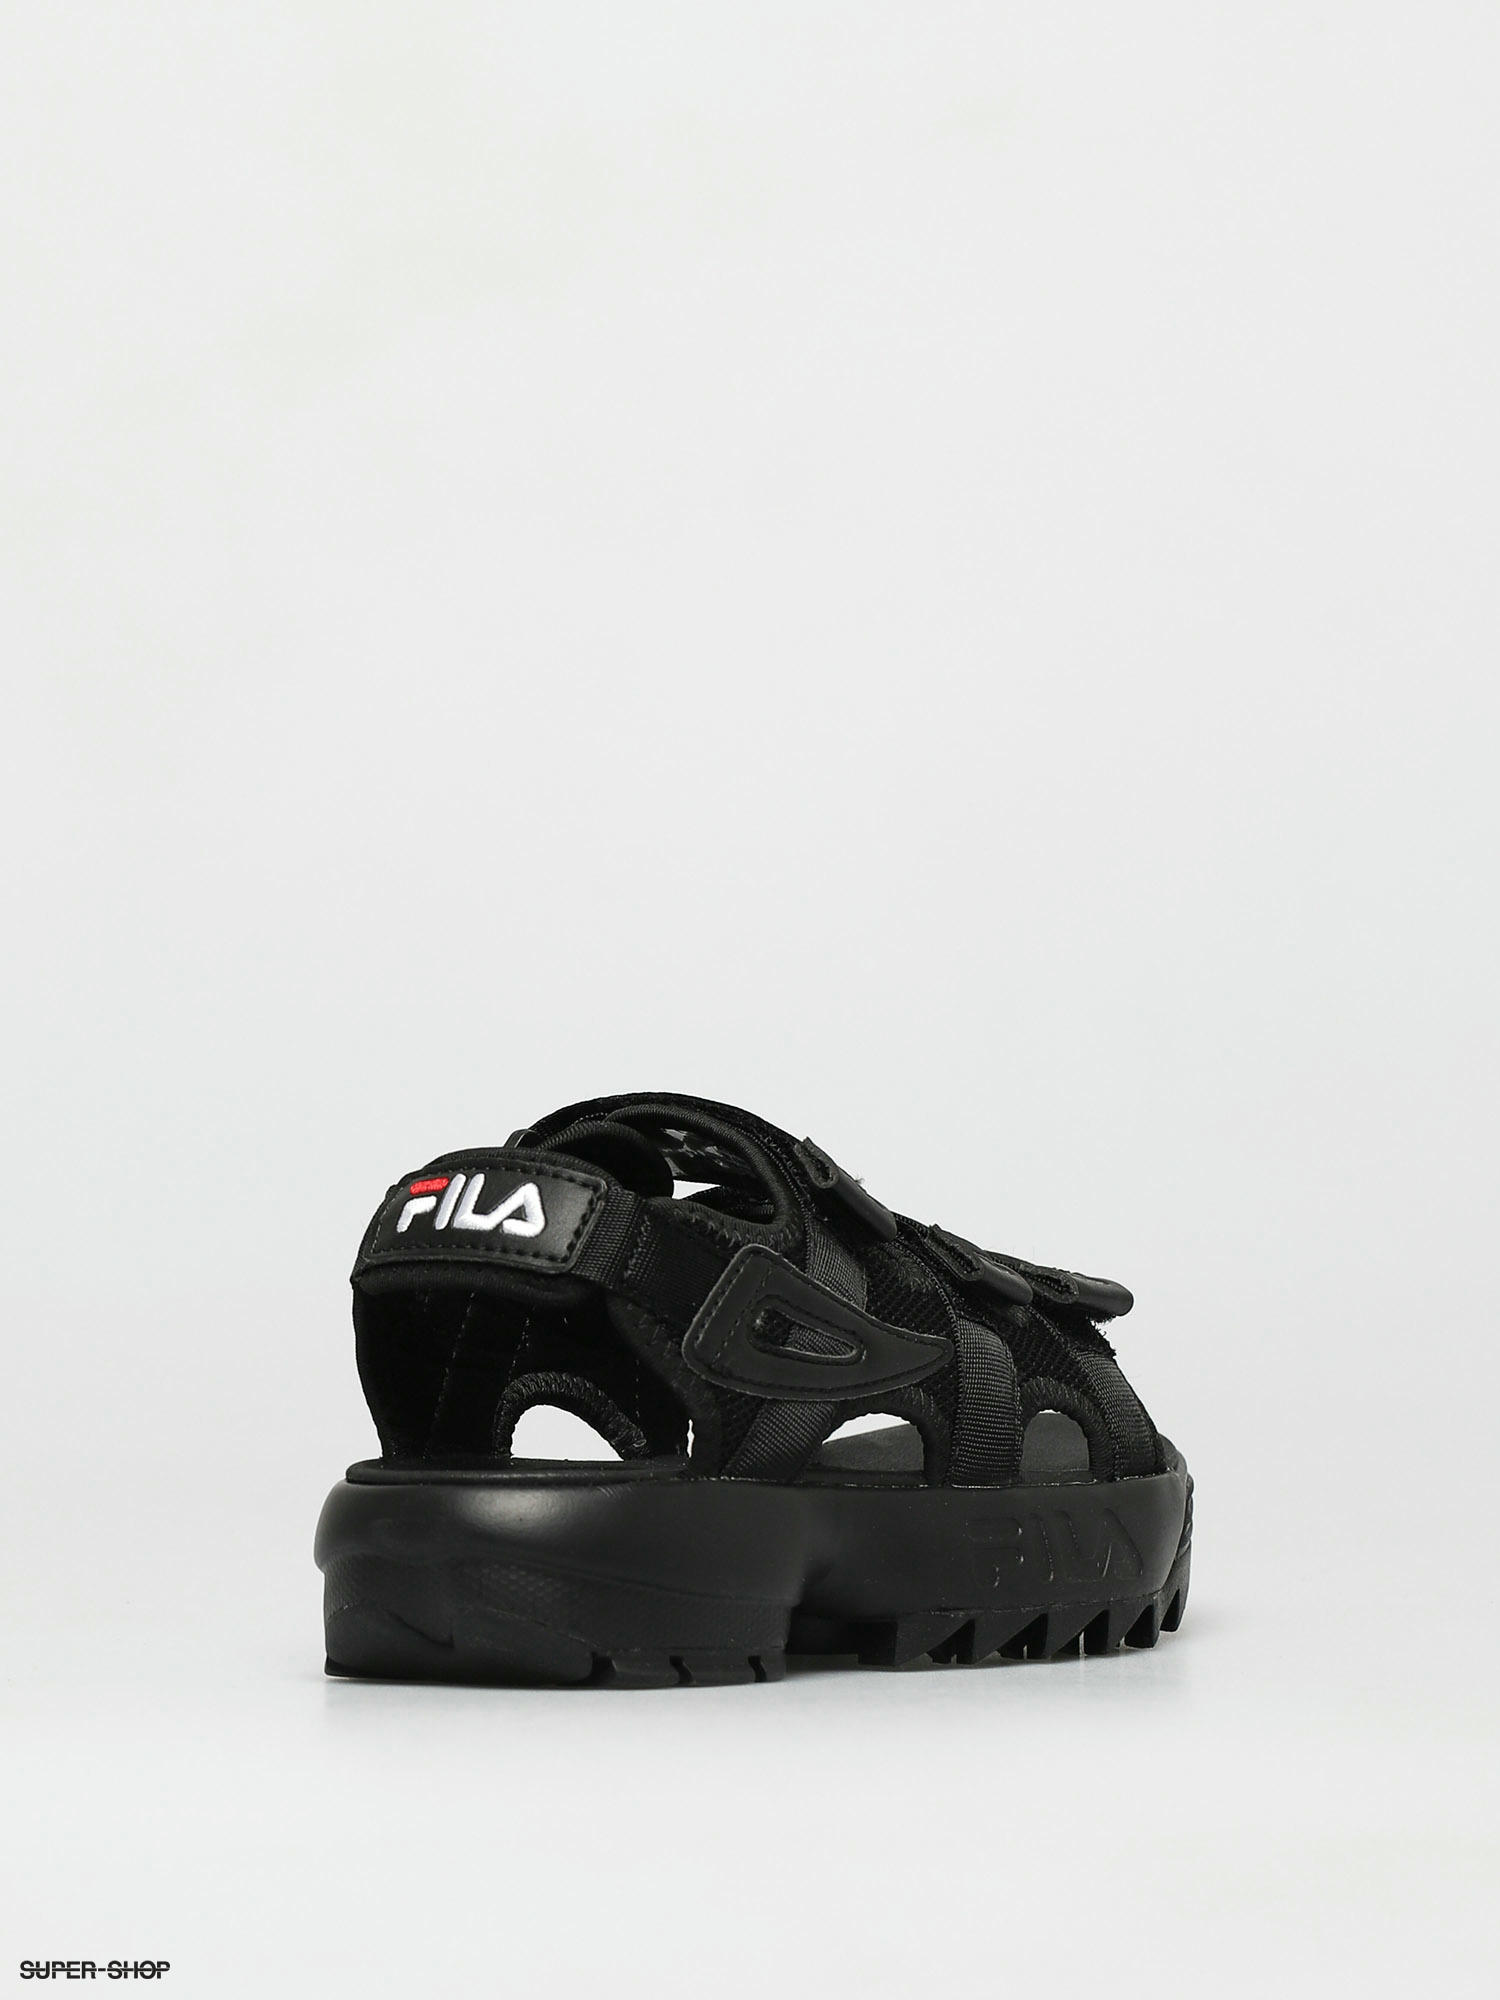 Discover 147+ fila disruptor sandals black